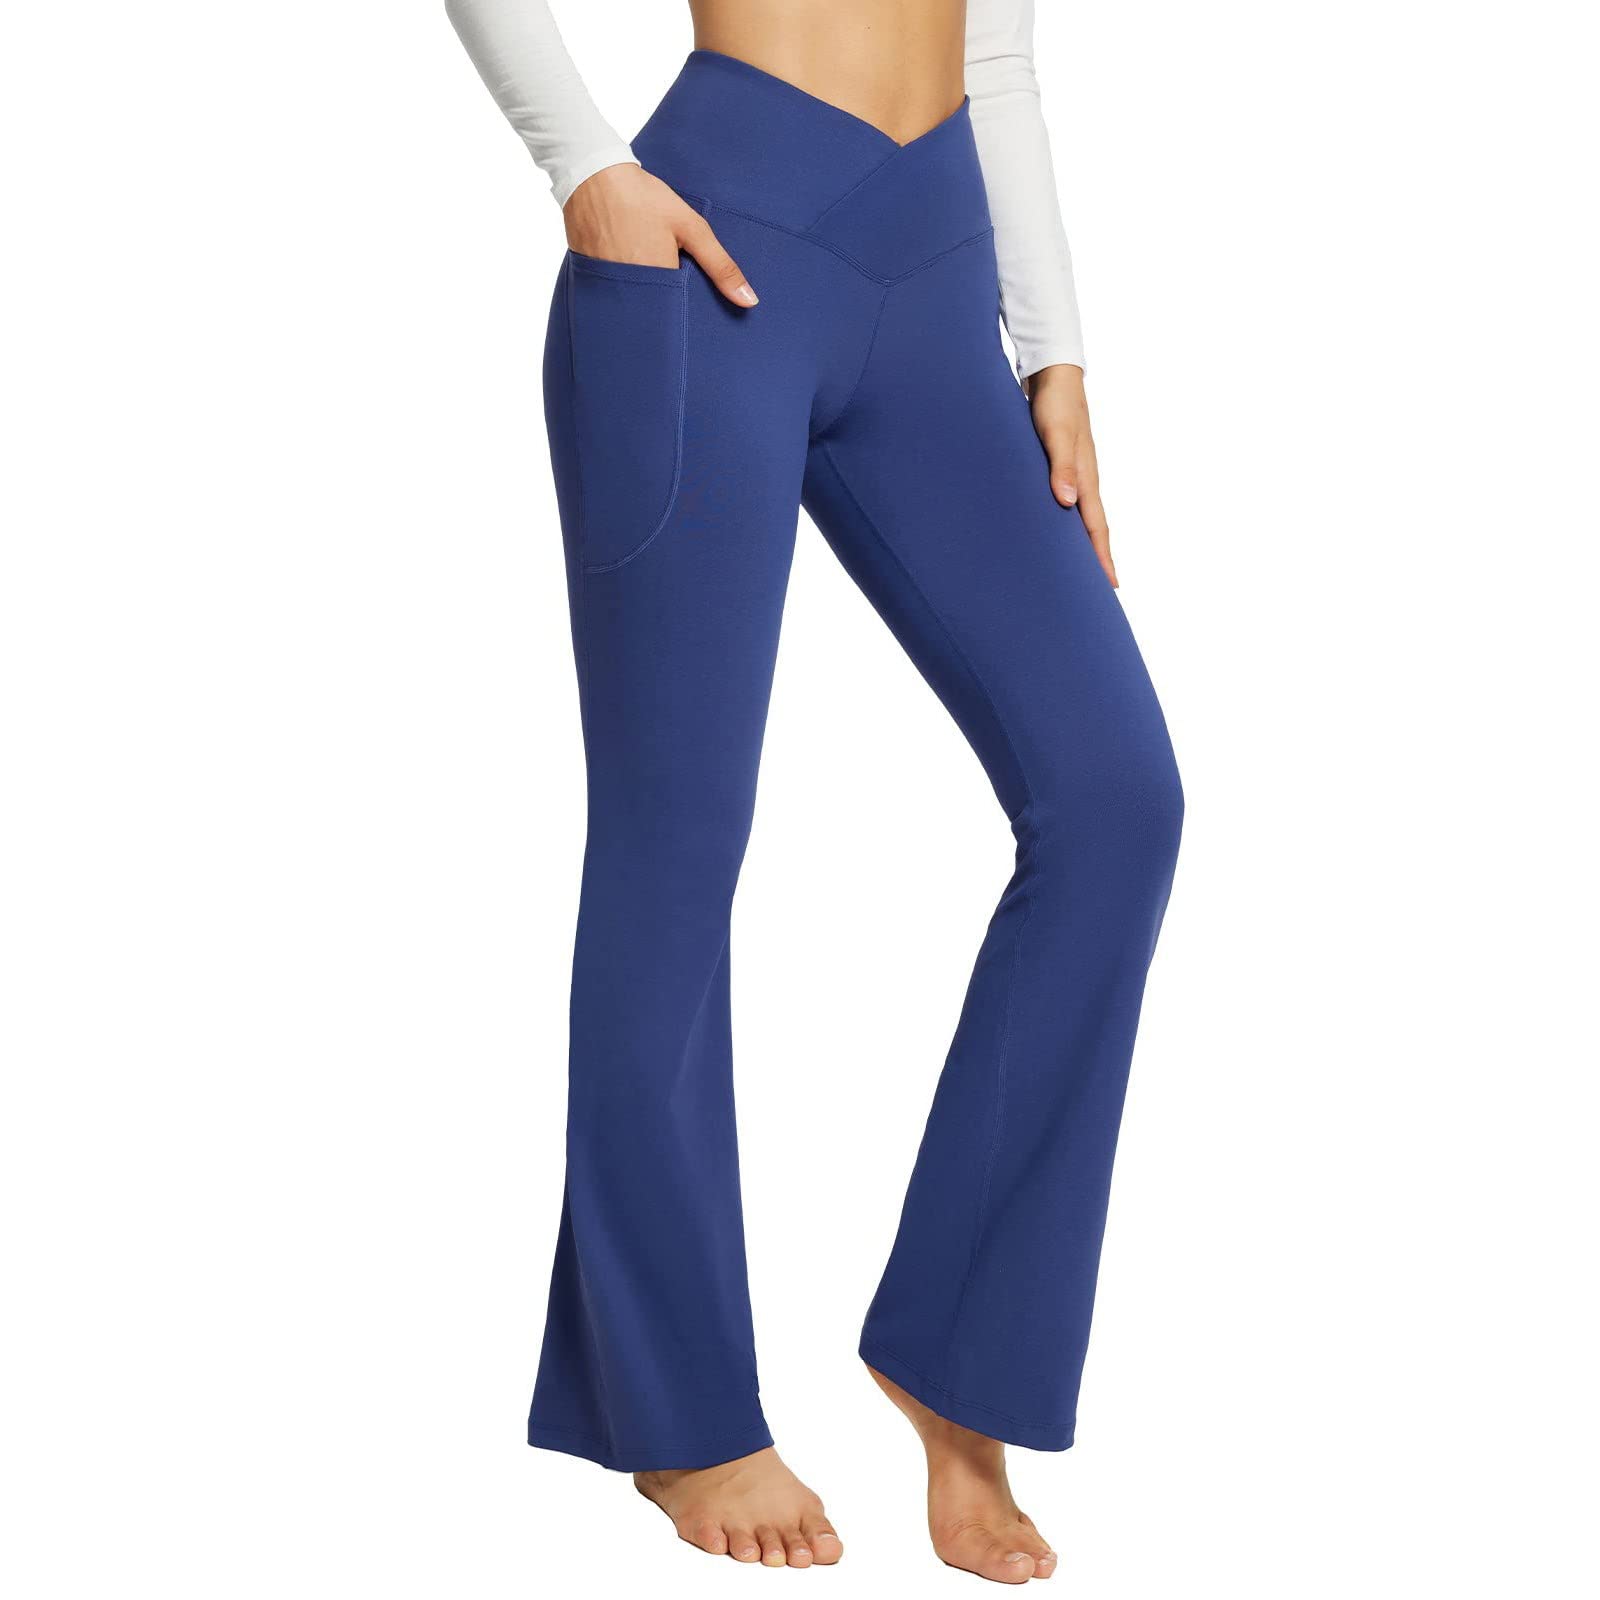 DailyWear Womens Solid Knee Length Short Yoga Cotton Leggings Black, Medium  